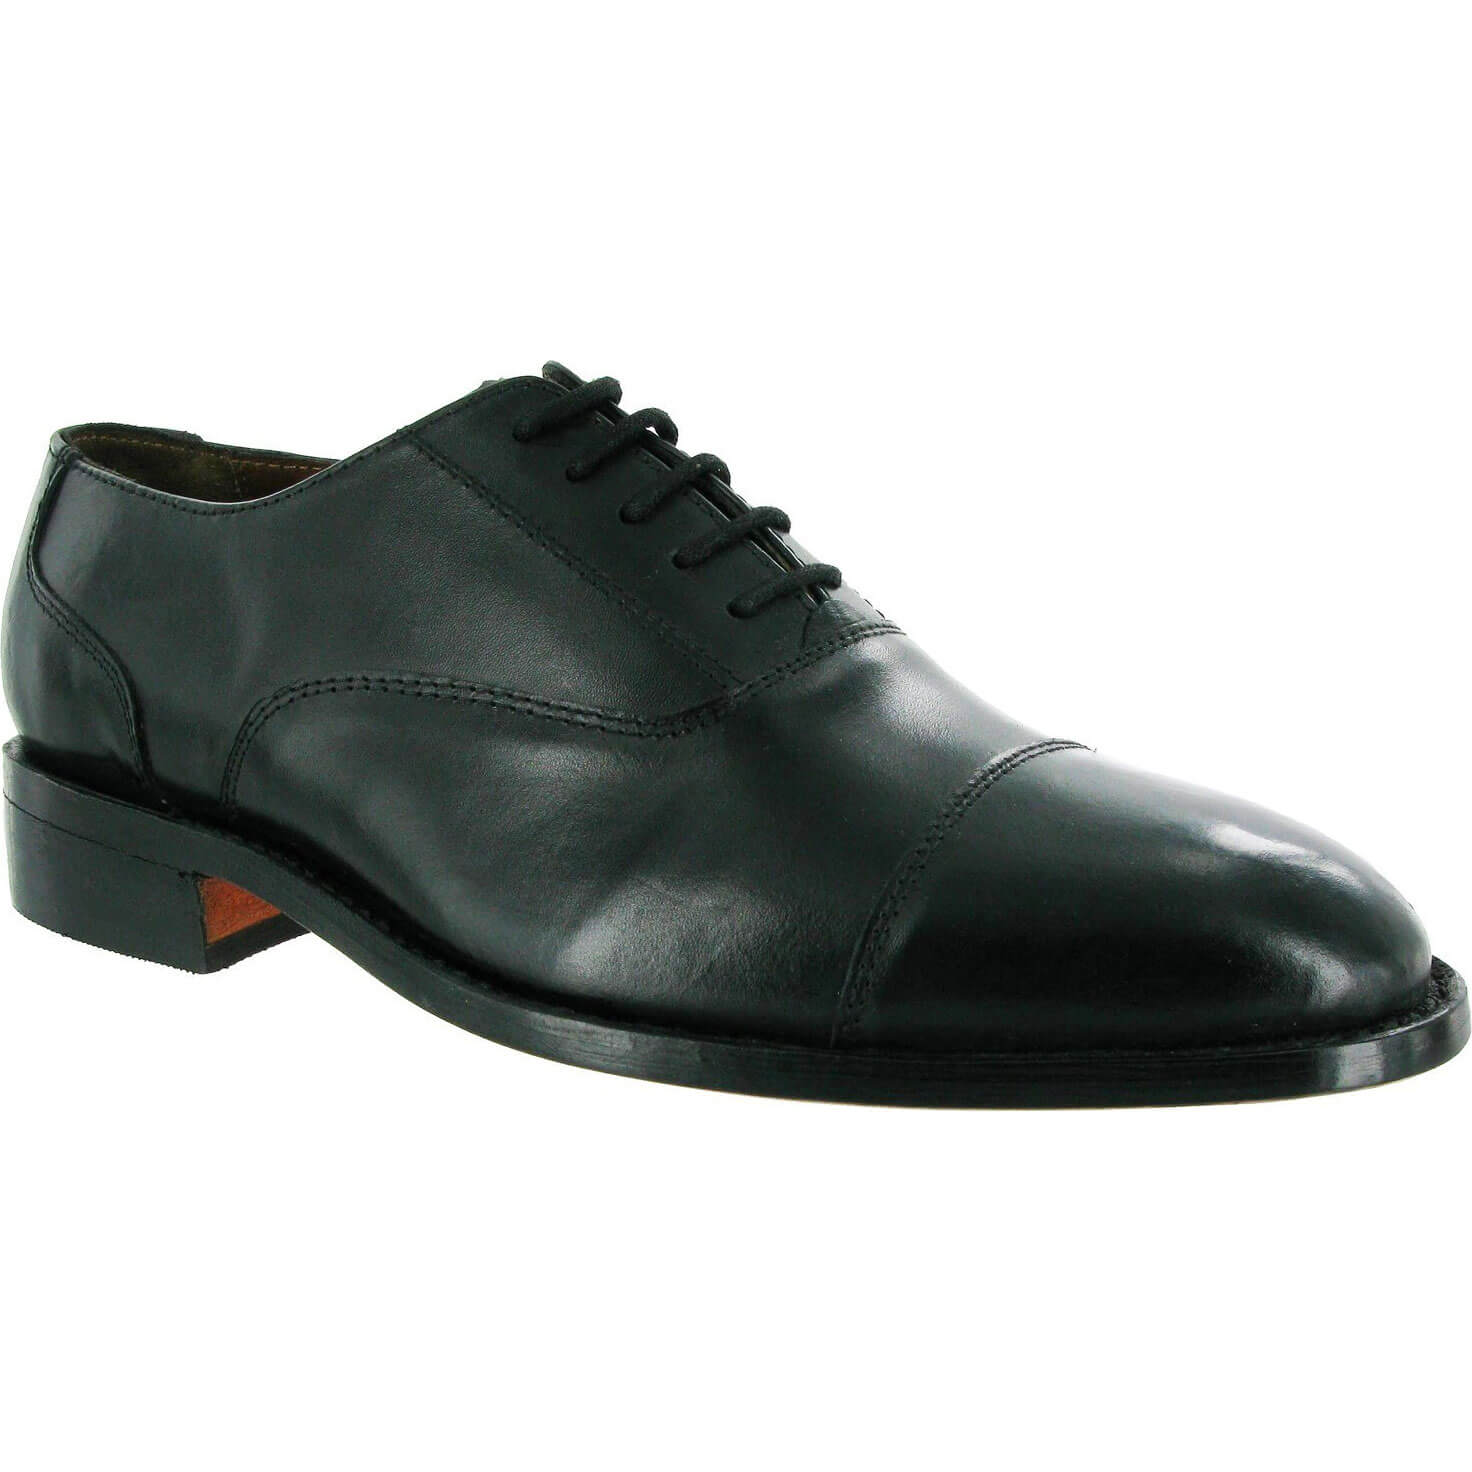 Image of Amblers James Leather Soled Oxford Dress Shoe Black Size 13